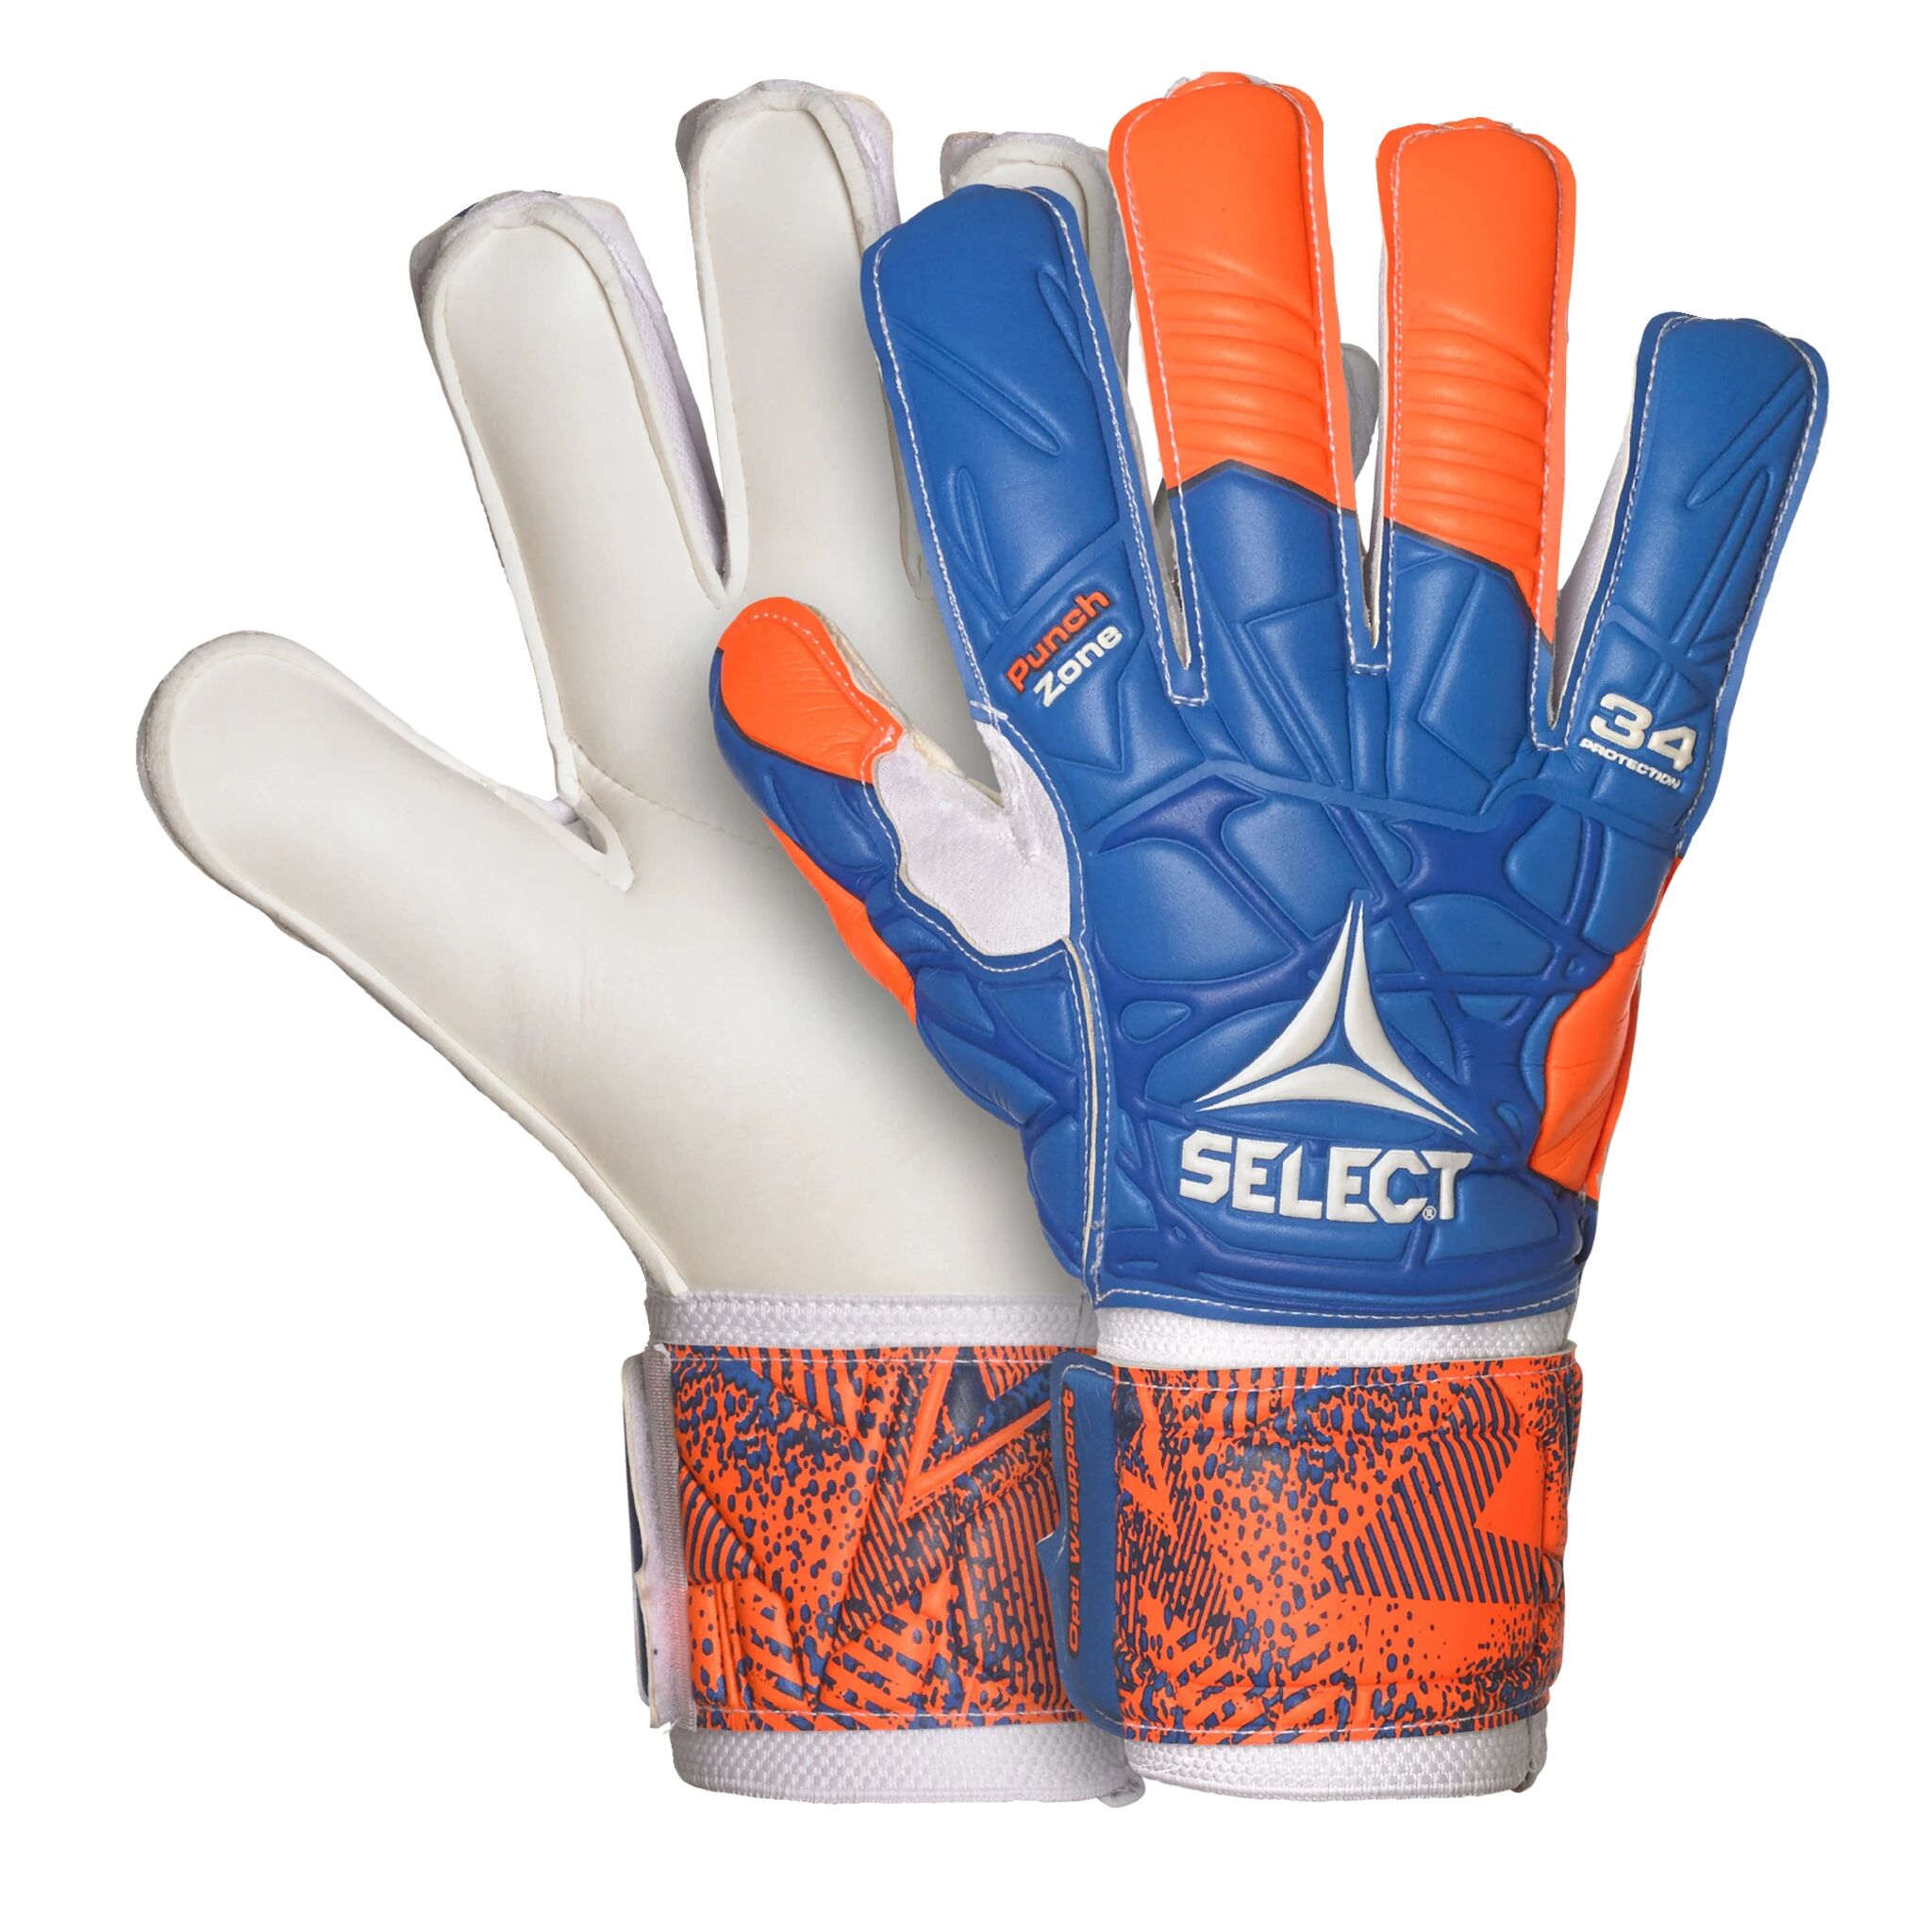 Select 34 Protection -19, keeperhanske senior 10 orange/blue/white